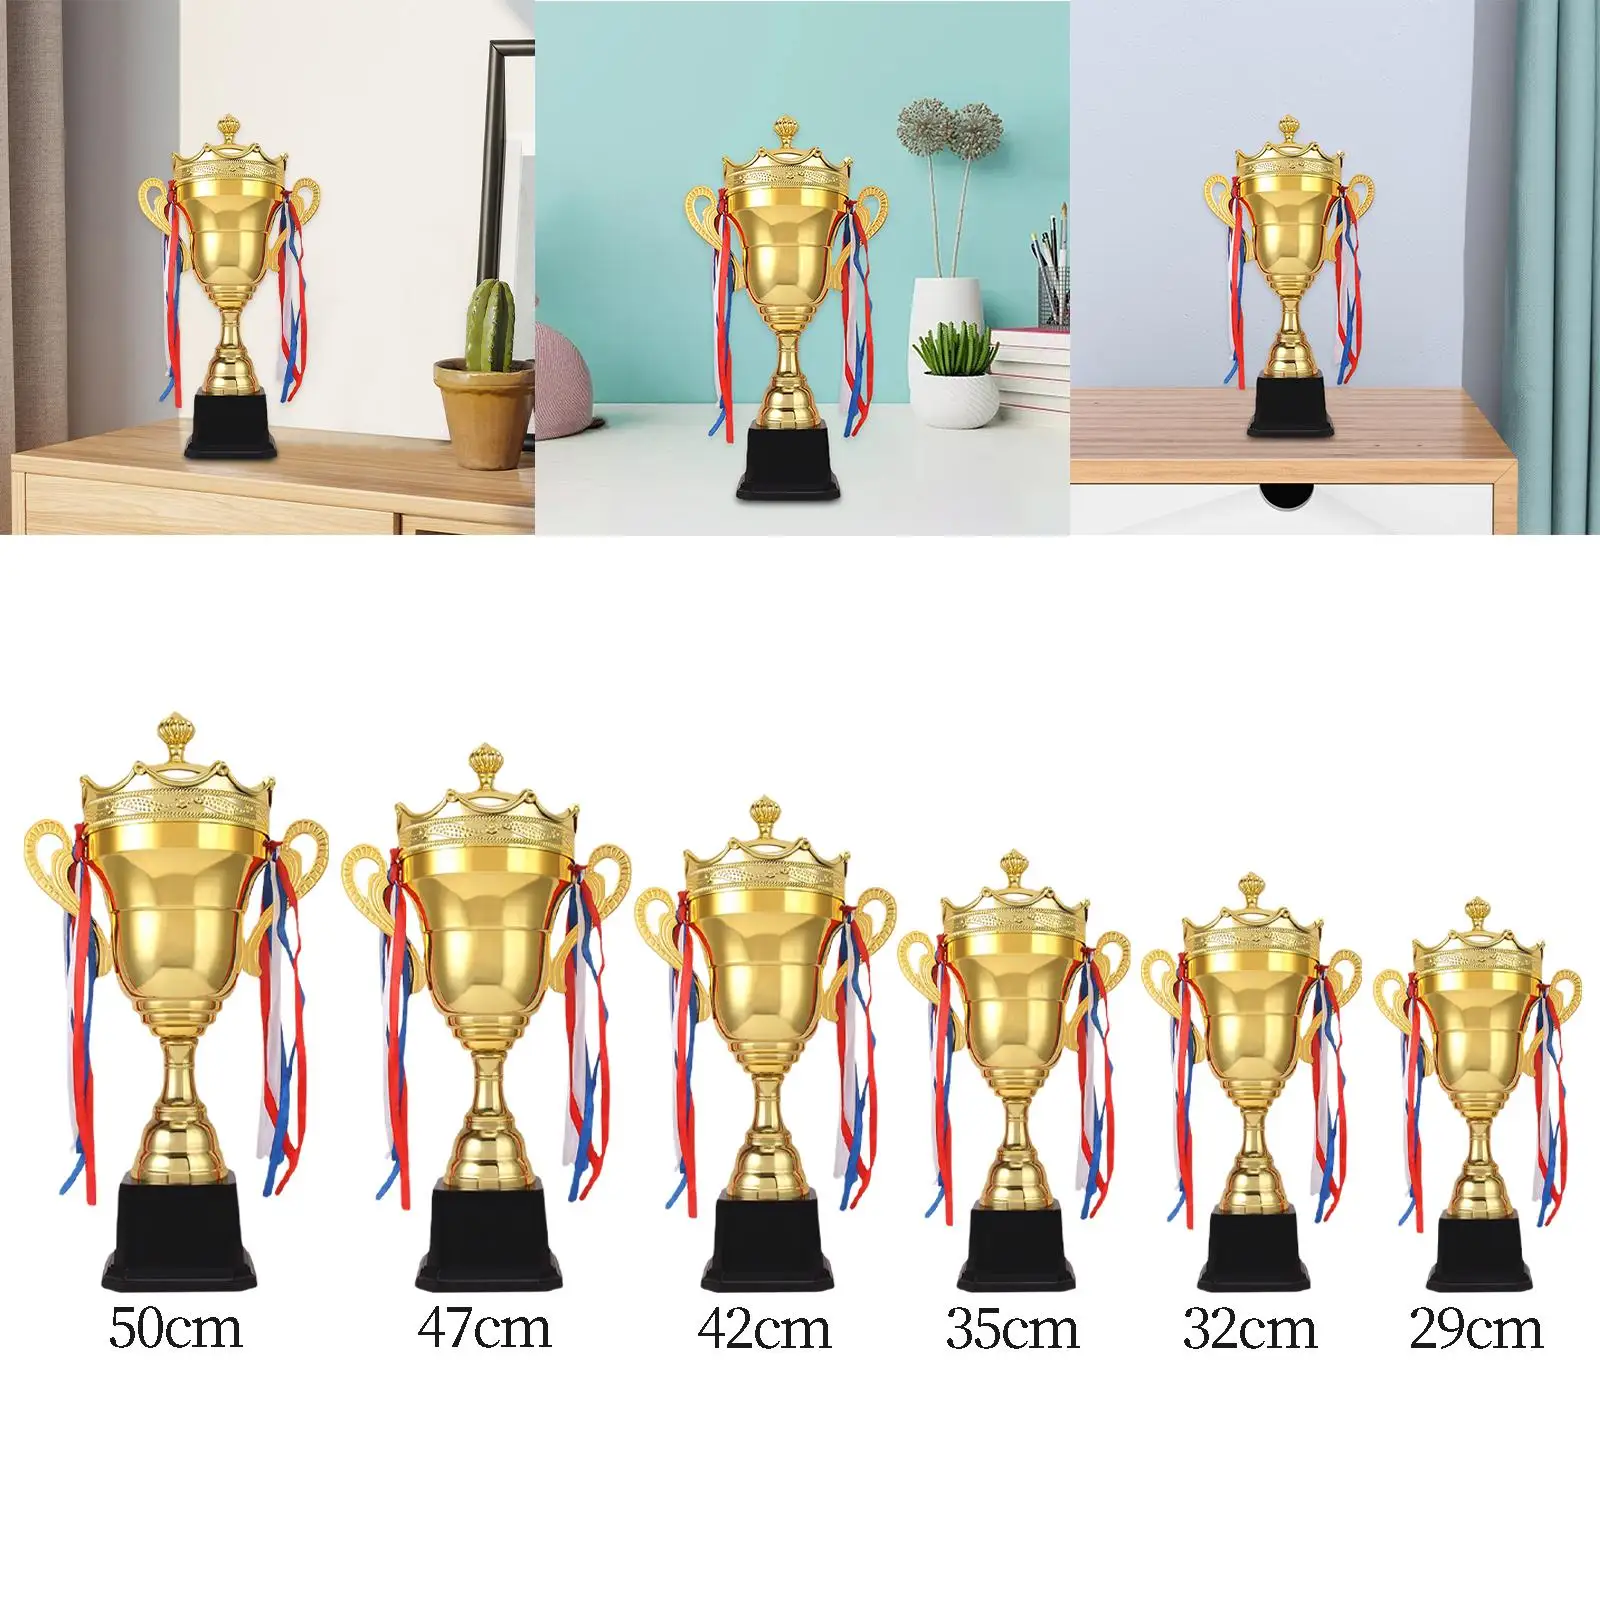 Award Trophy Metal Rewards Keepsake for Soccer Football League Match